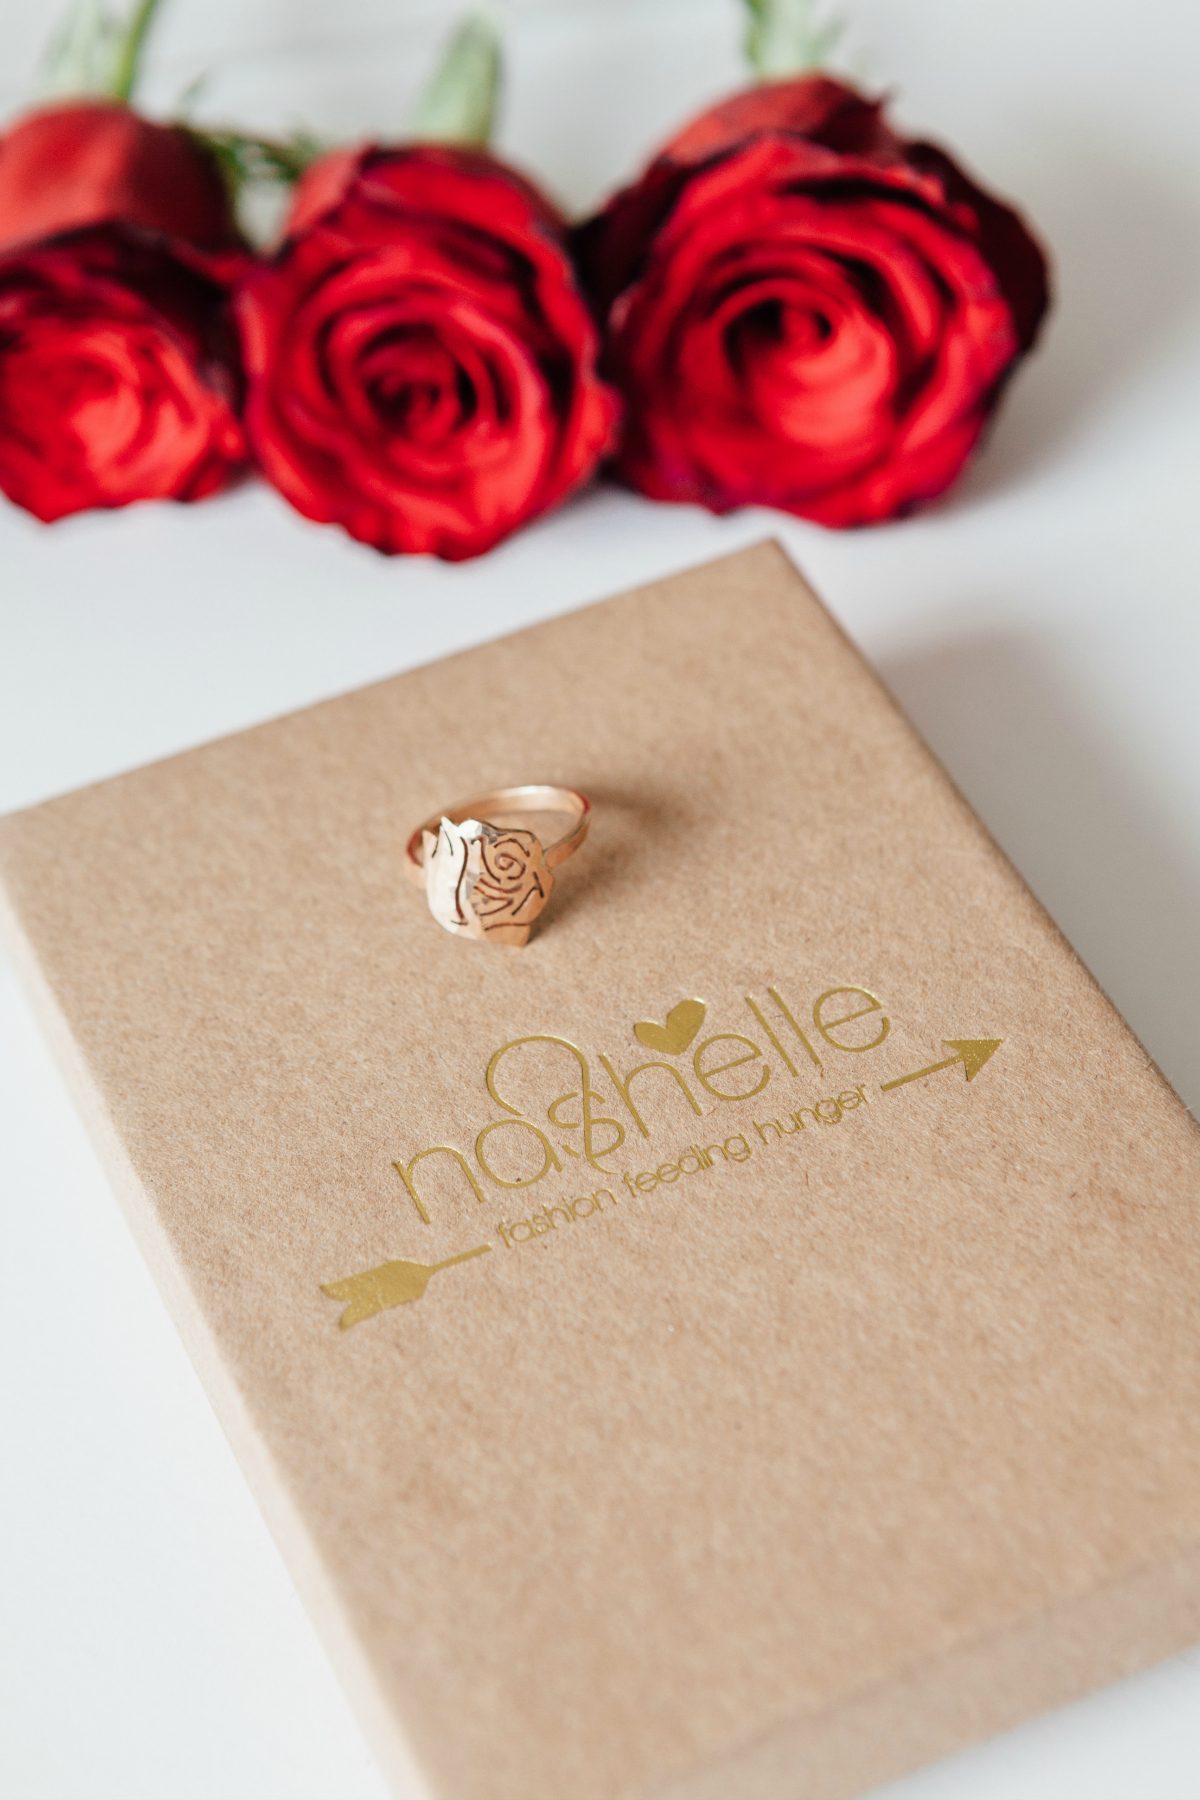 MelissaRose x Nashelle ring and roses